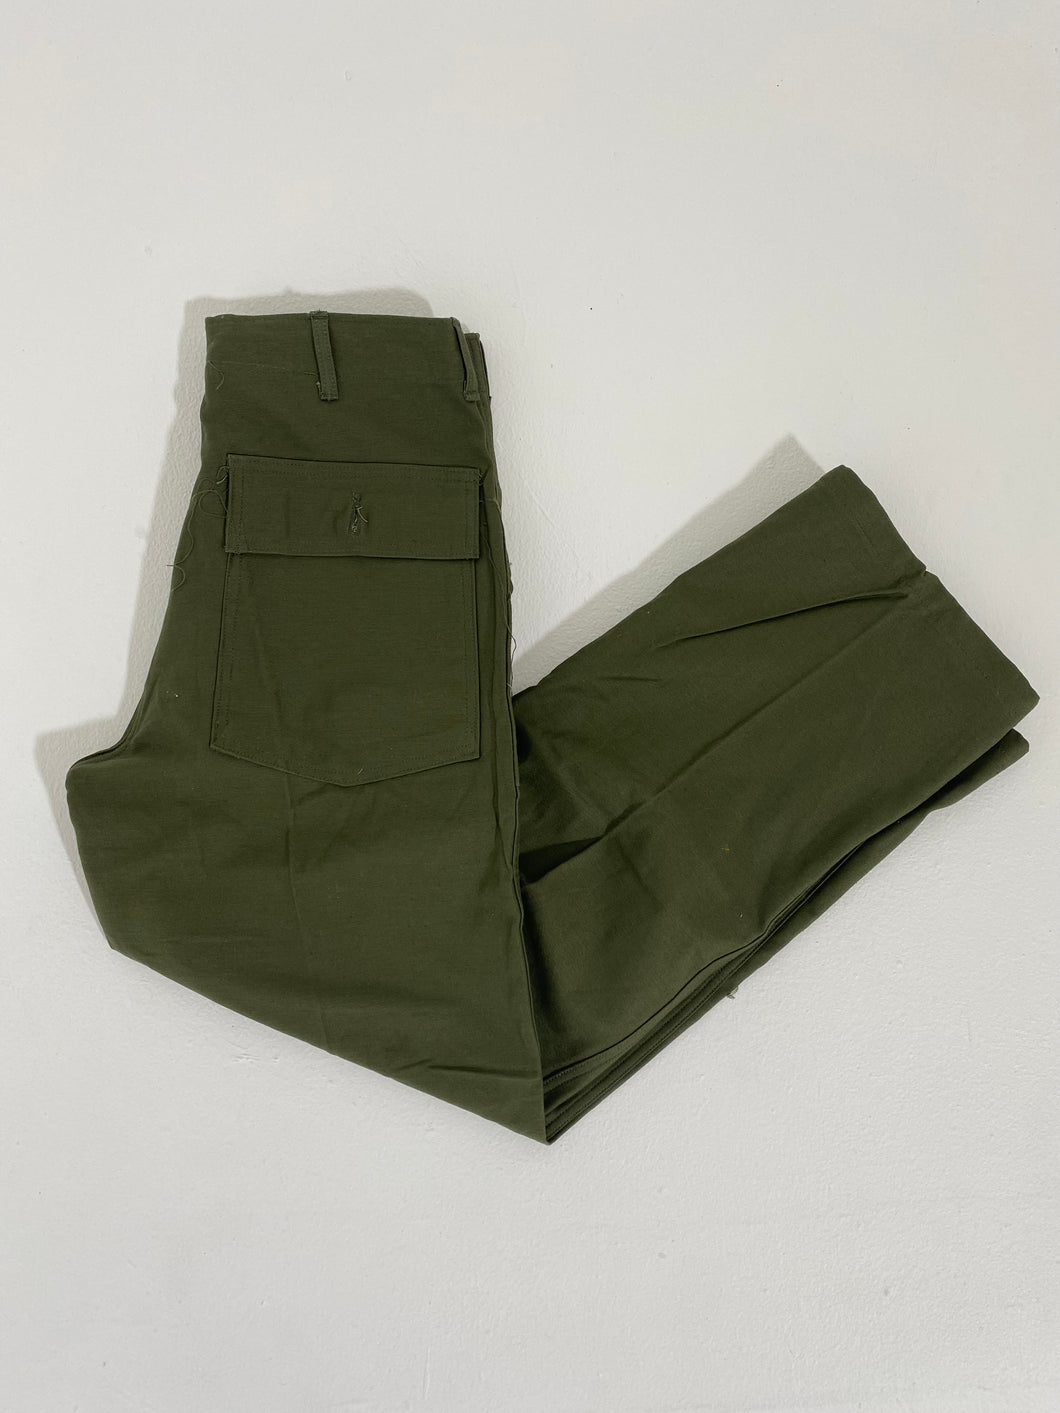 Vintage 1990's Military Cargo Pants Sz. 32x31